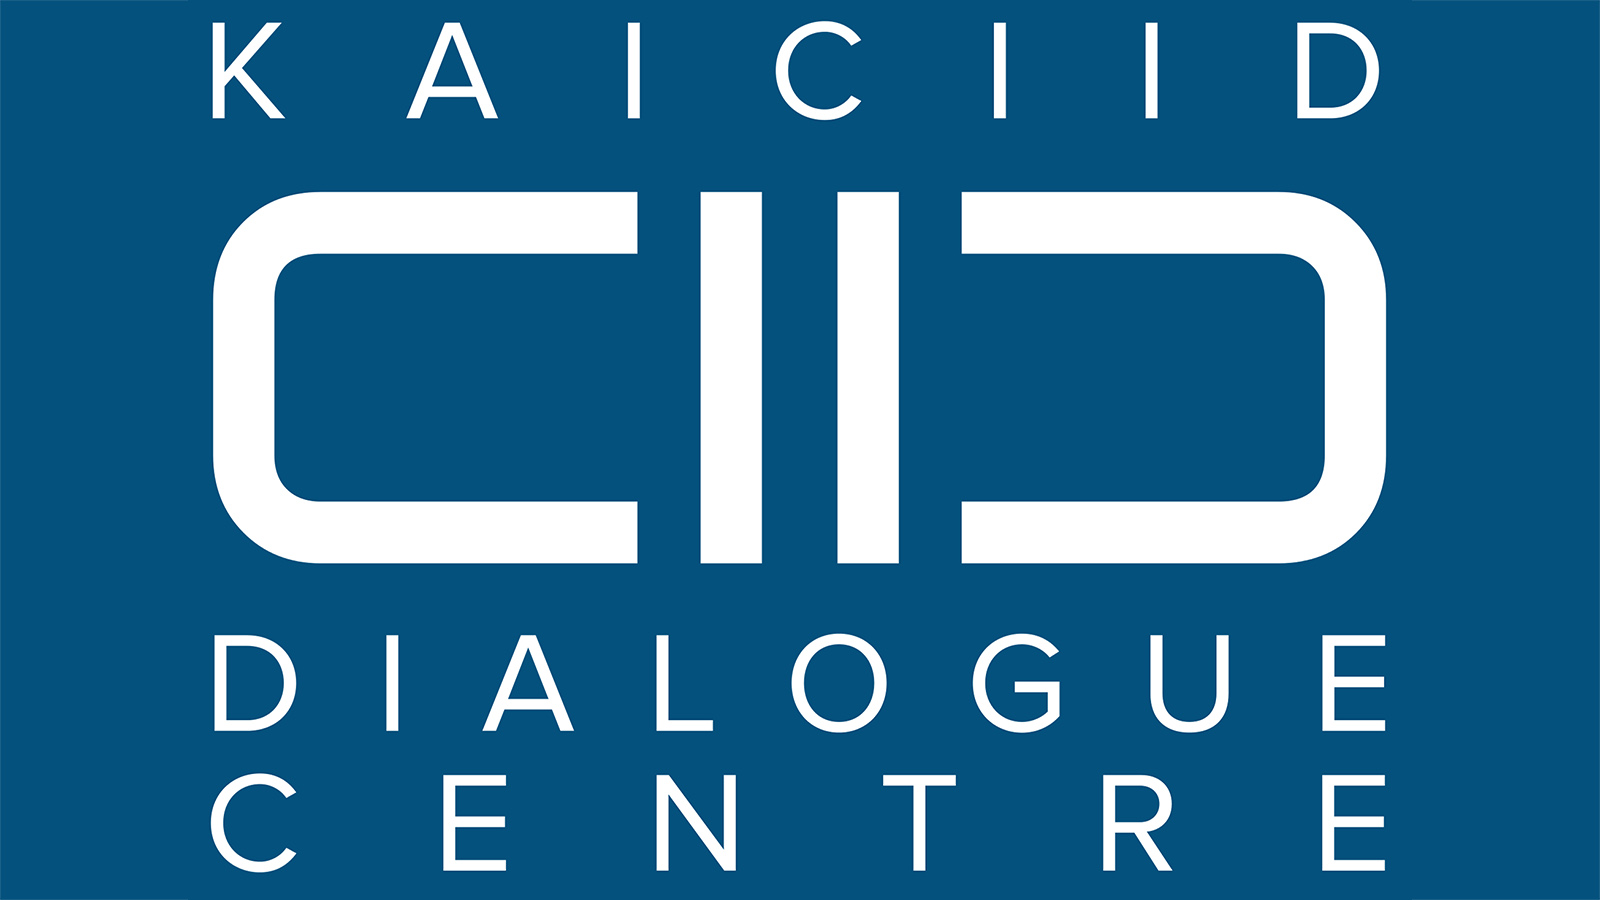 The King Abdullah International Center for Interreligious and Intercultural Dialogue, KAICIID, logo. Image via KAICIID